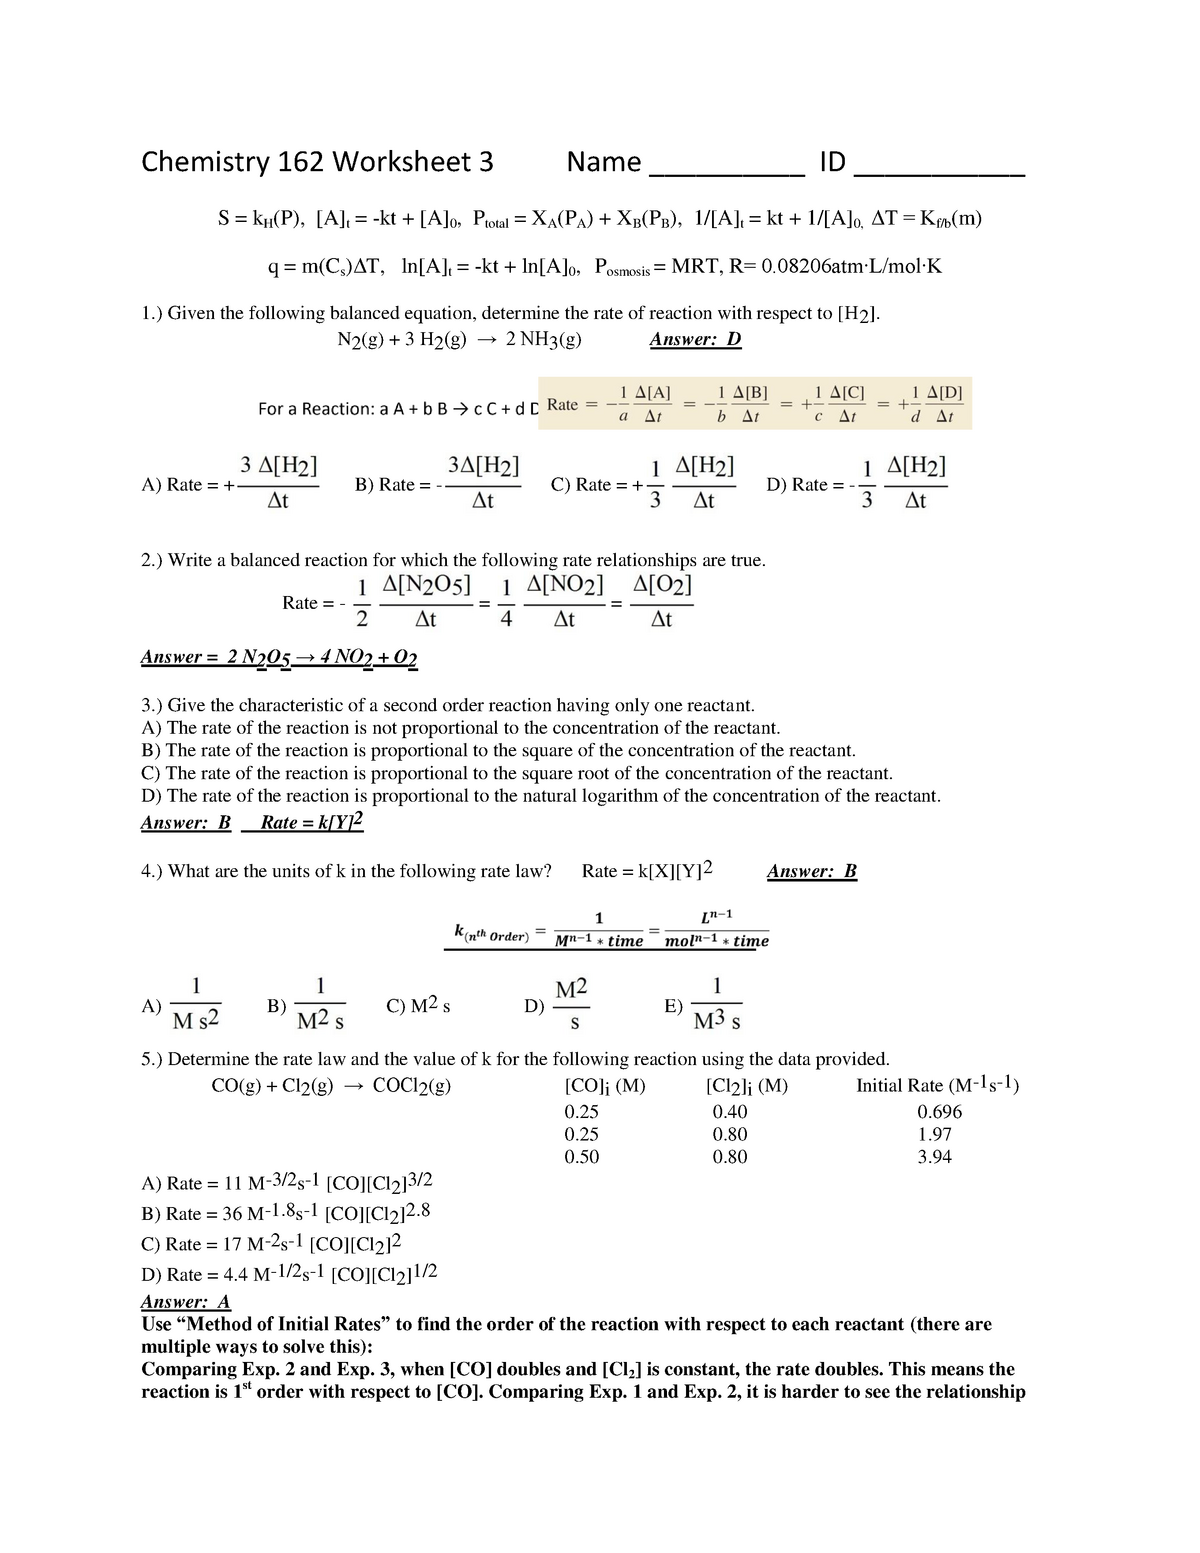 chapter-6-automotive-measurement-and-math-worksheet-answers-automotive-math-worksheets